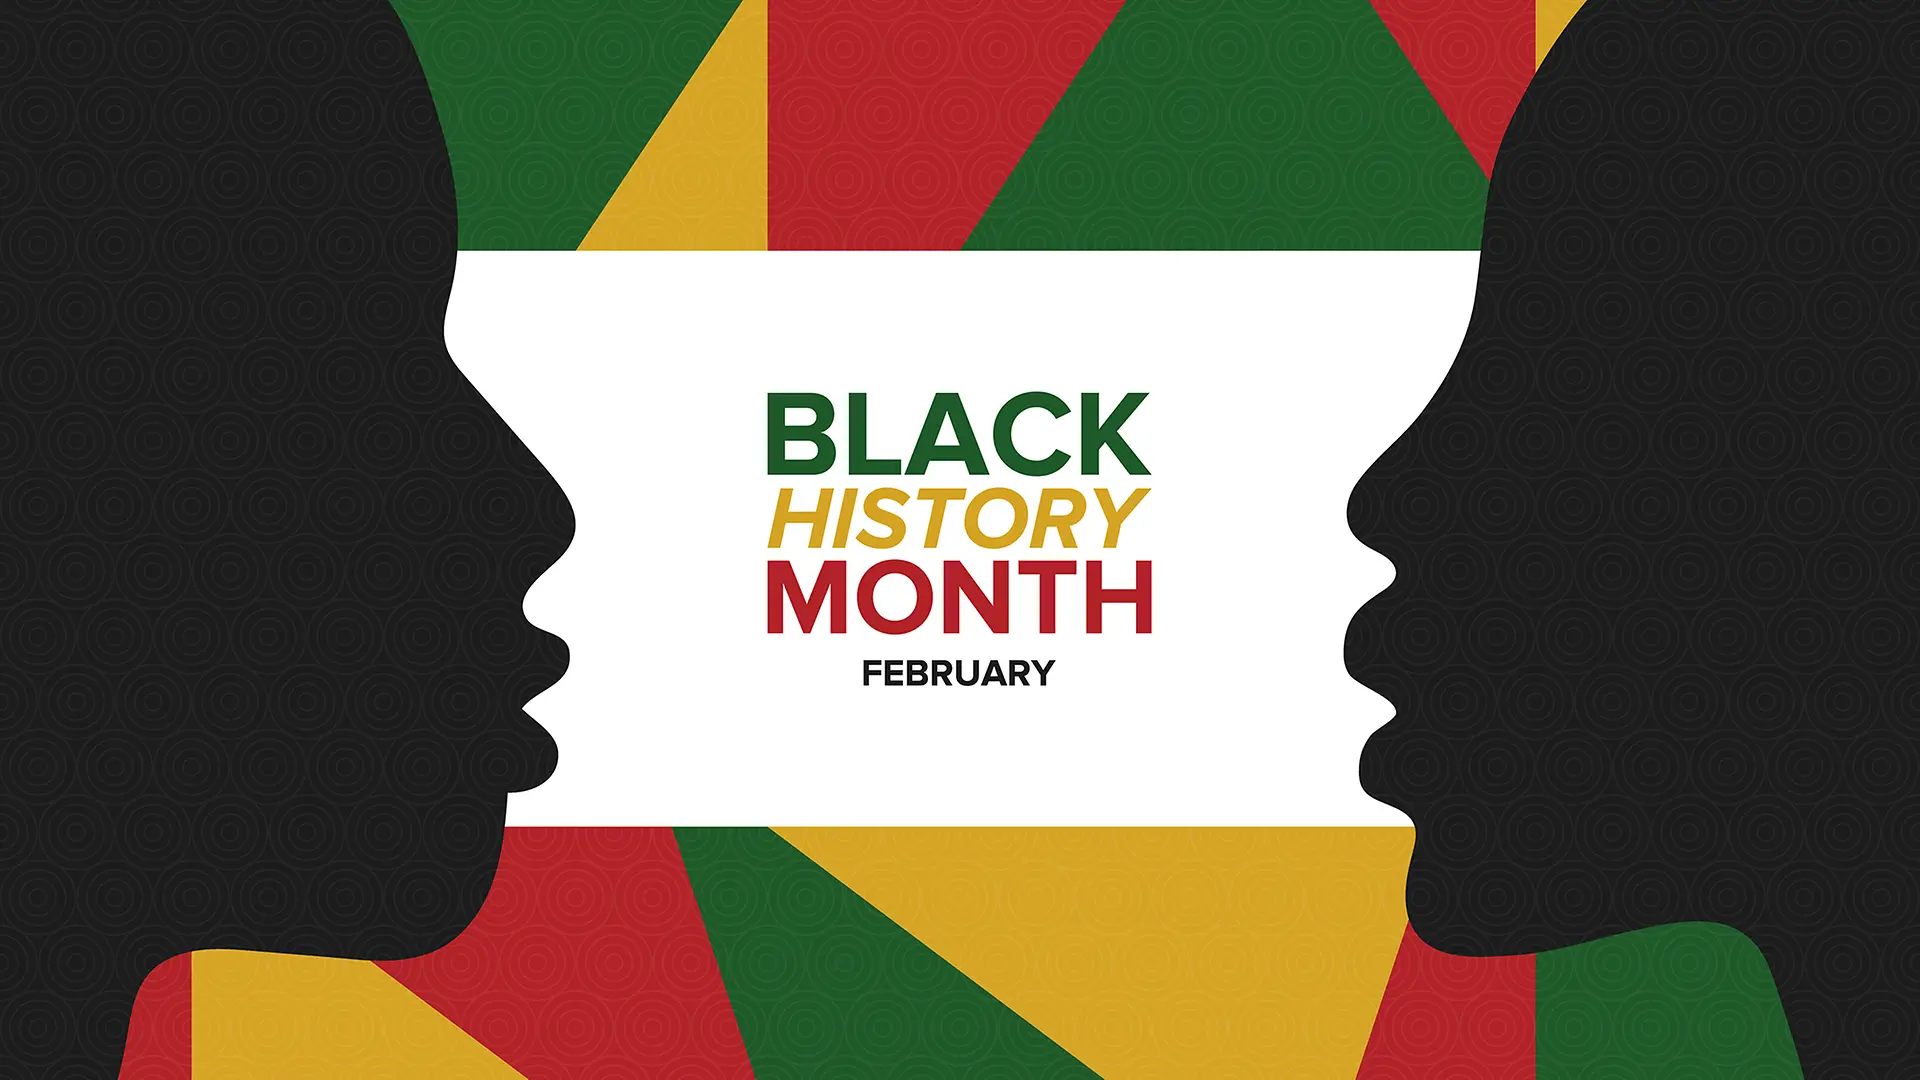 Black History Month February 2020